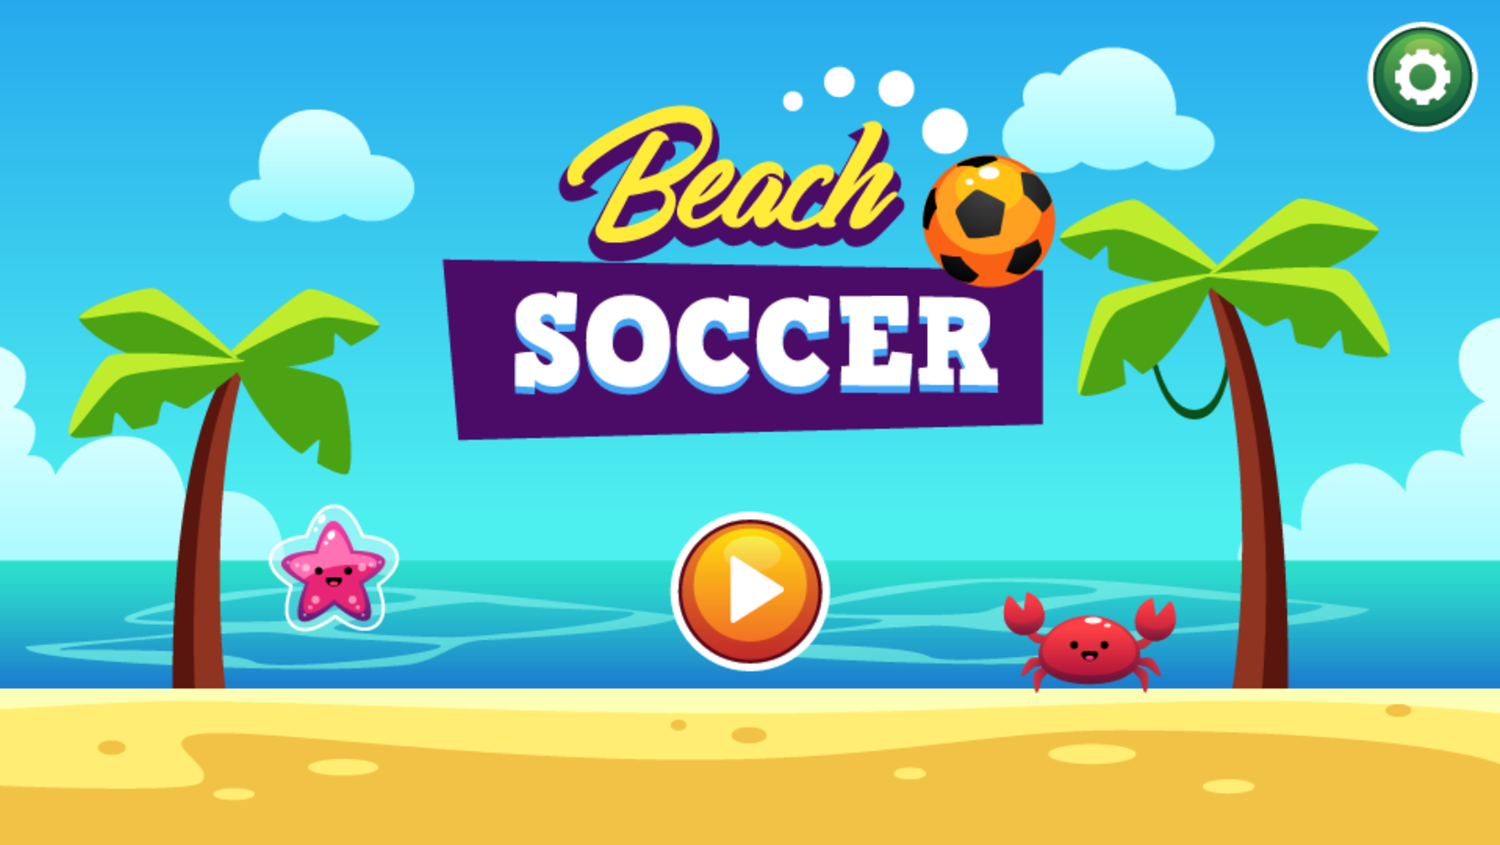 Beach Soccer Game Welcome Screen Screenshot.